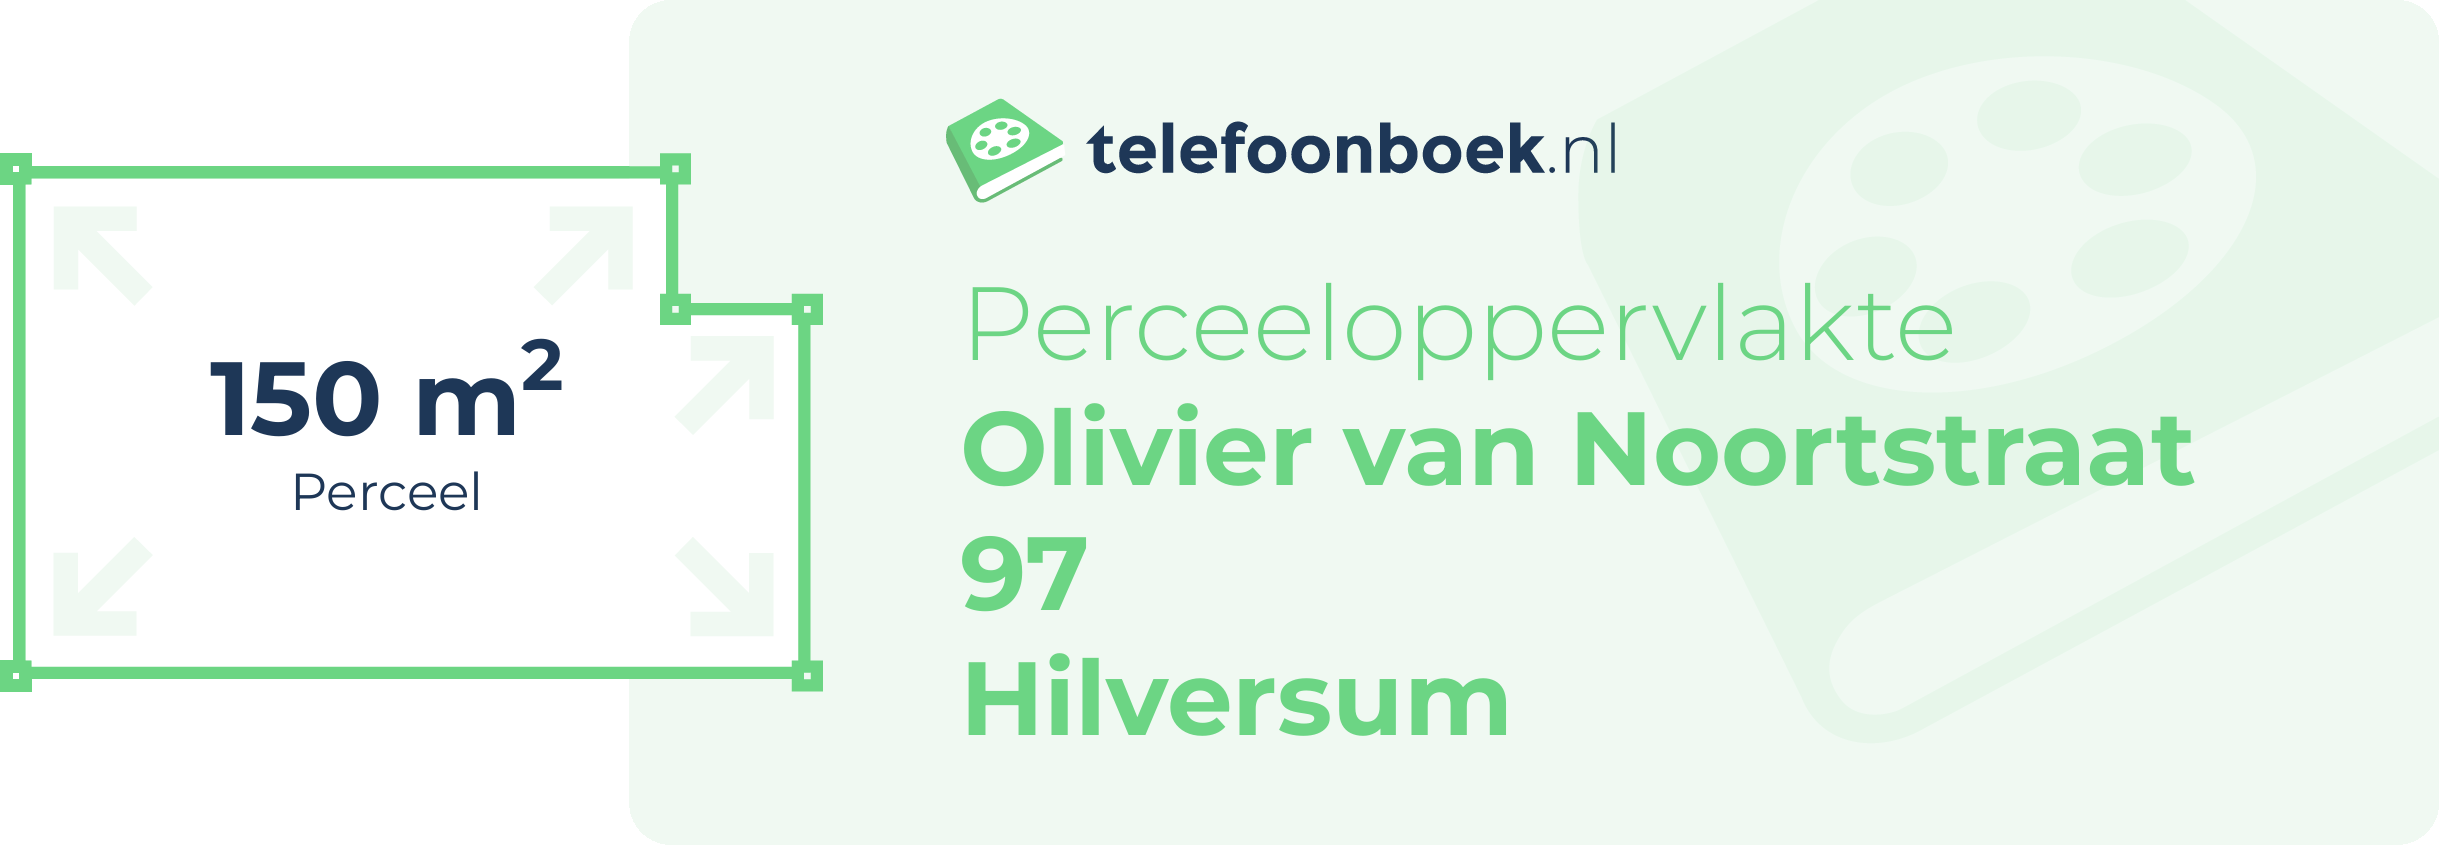 Perceeloppervlakte Olivier Van Noortstraat 97 Hilversum